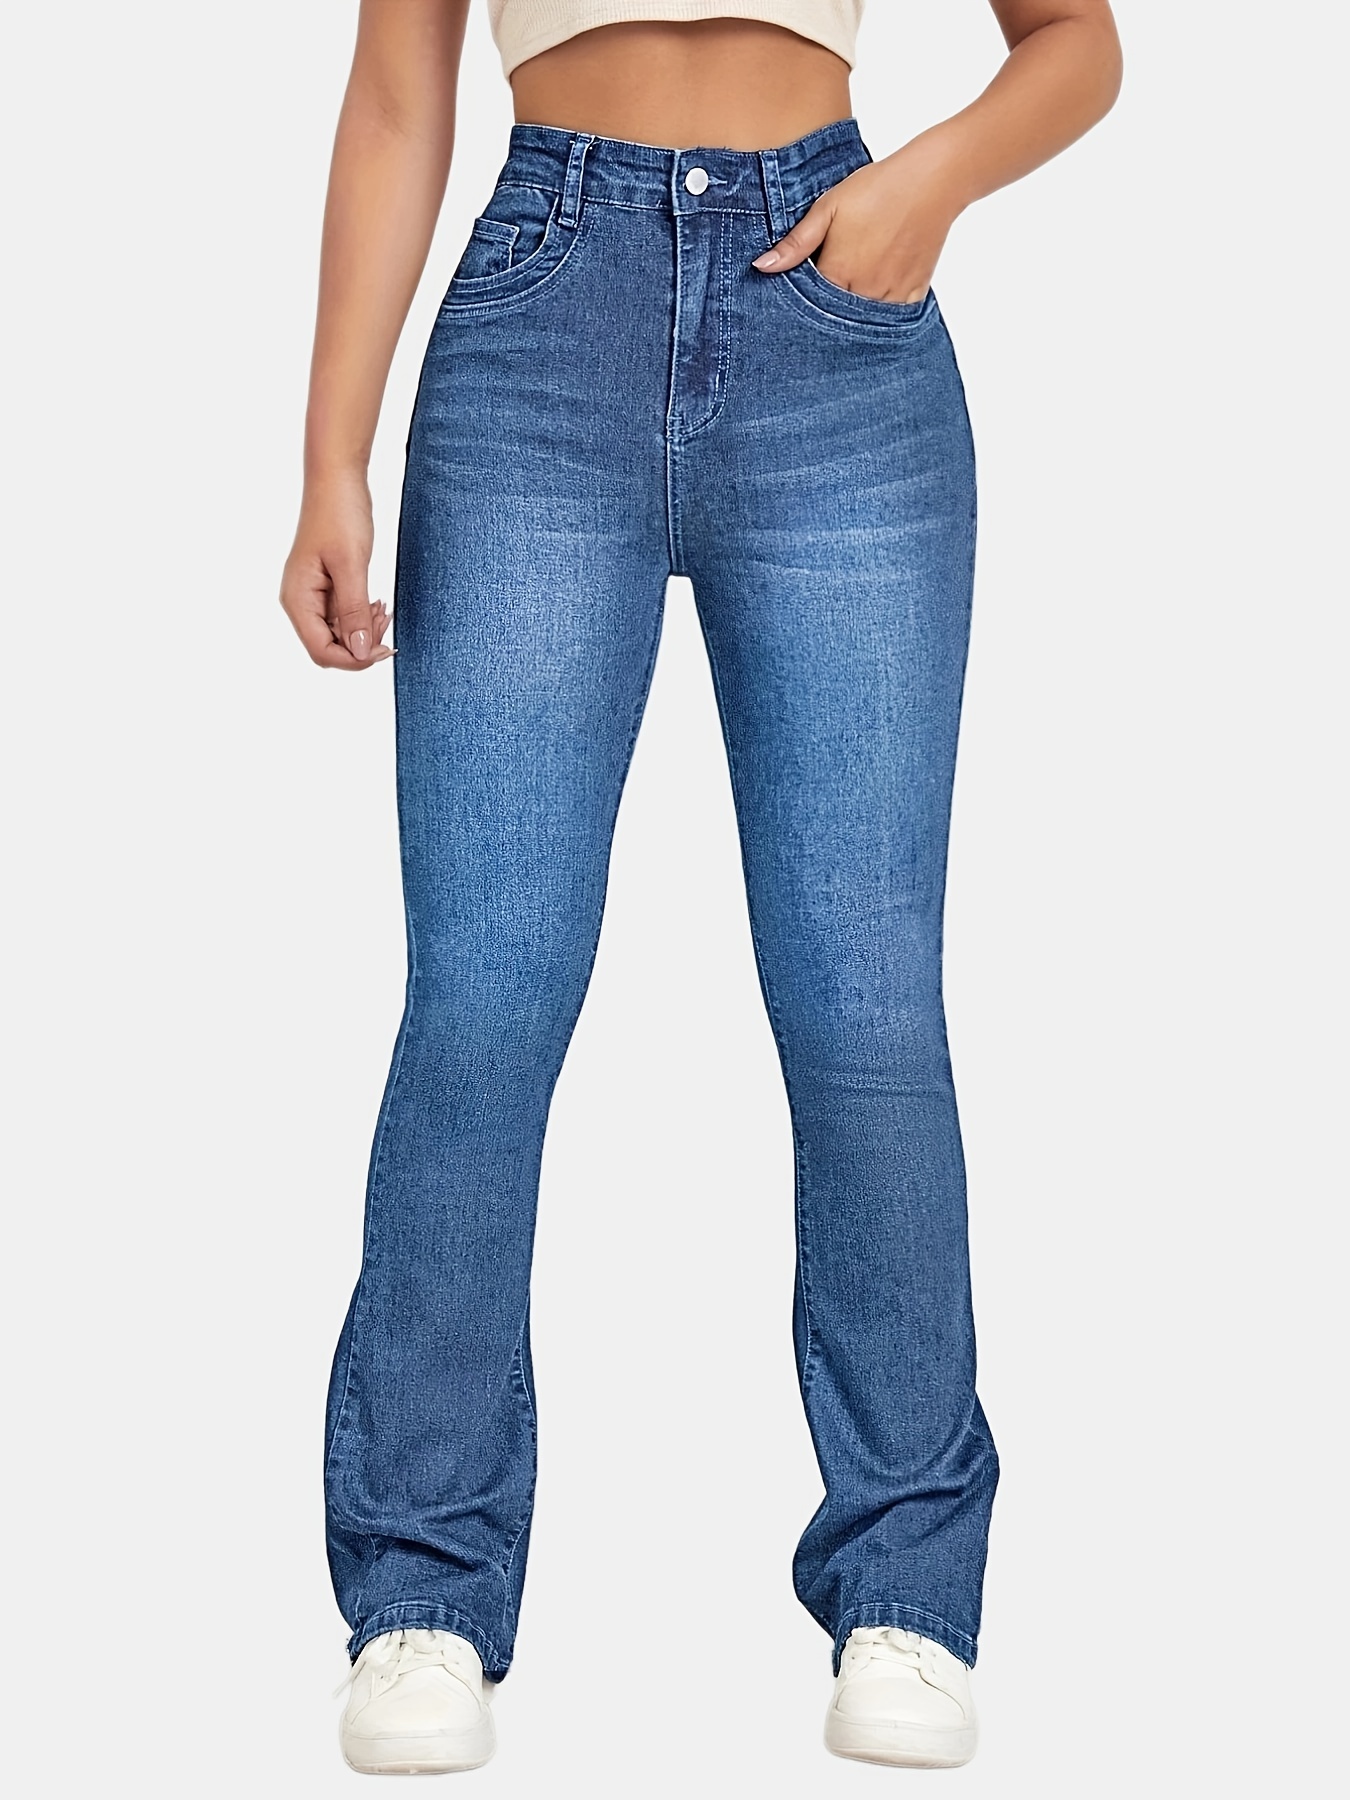 Navy Blue Fashion Bell Bottom Jeans, High Stretch Slim Fit Slant Pockets  Bell Bottom Jeans, Women's Denim Jeans & Clothing